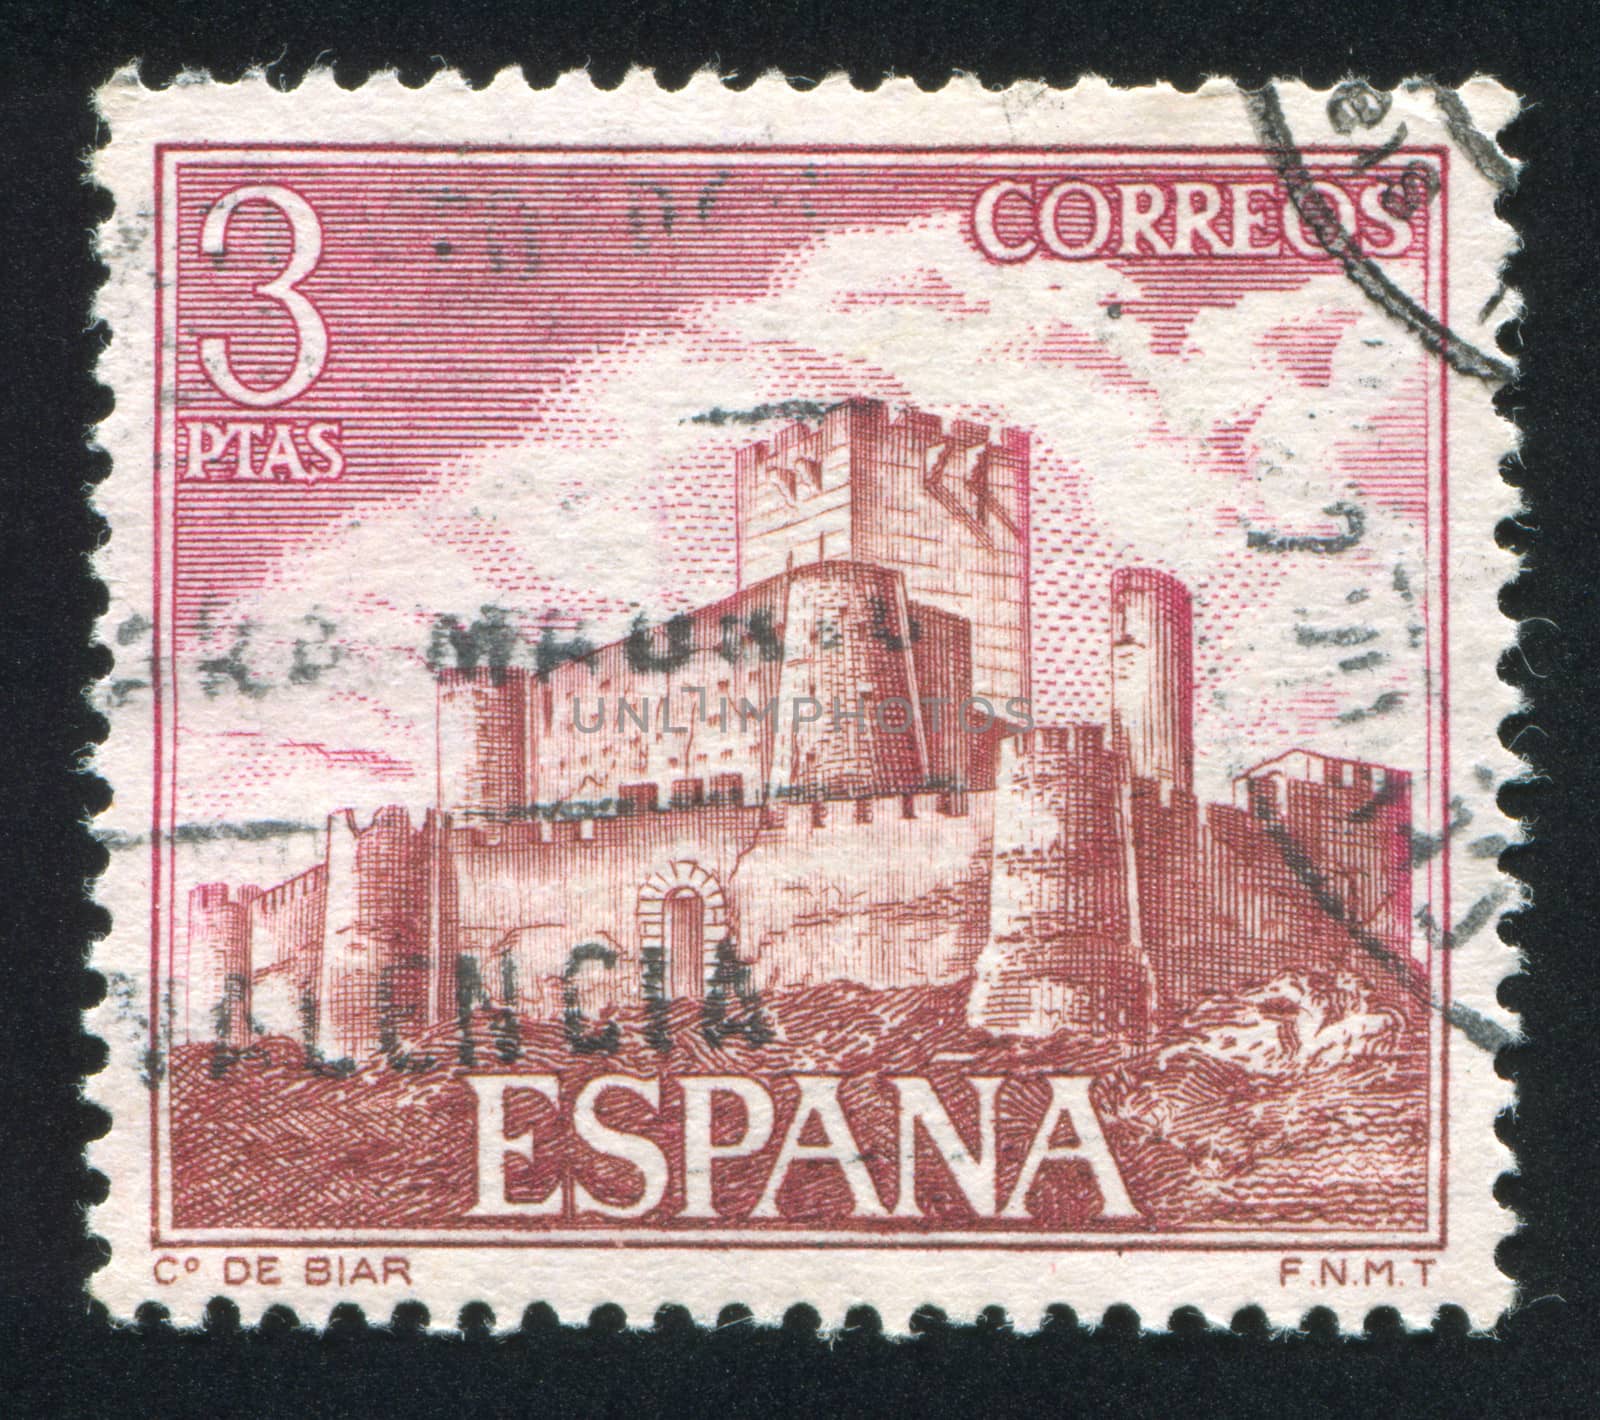 SPAIN - CIRCA 1972: stamp printed by Spain, shows Medieval Castle, Biar, circa 1972